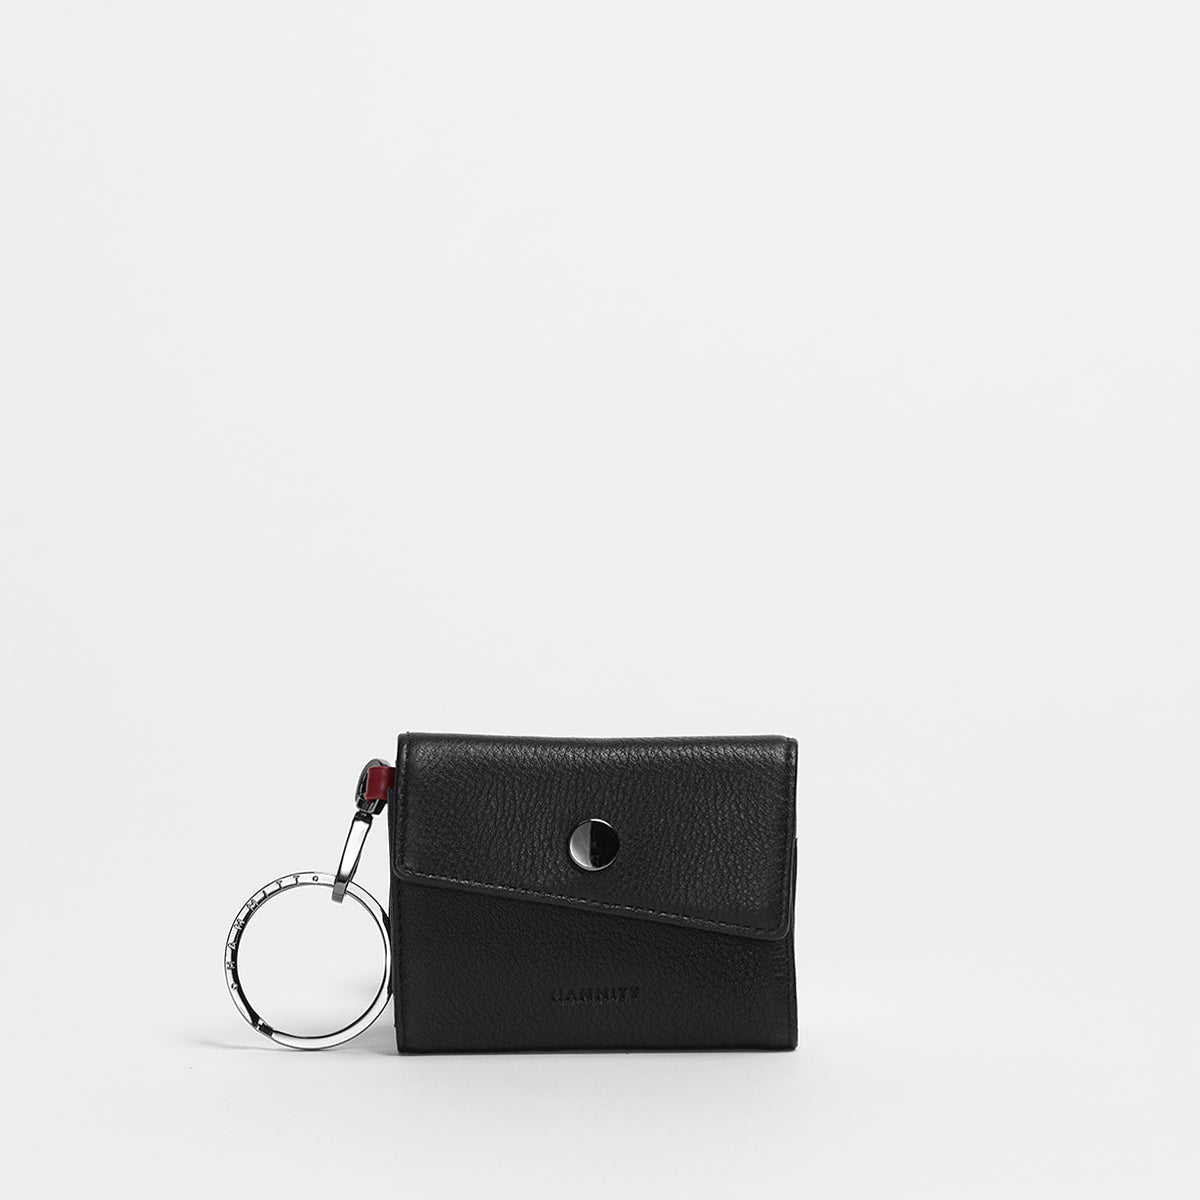 Royce-Key-Wallet-Black-Front-View